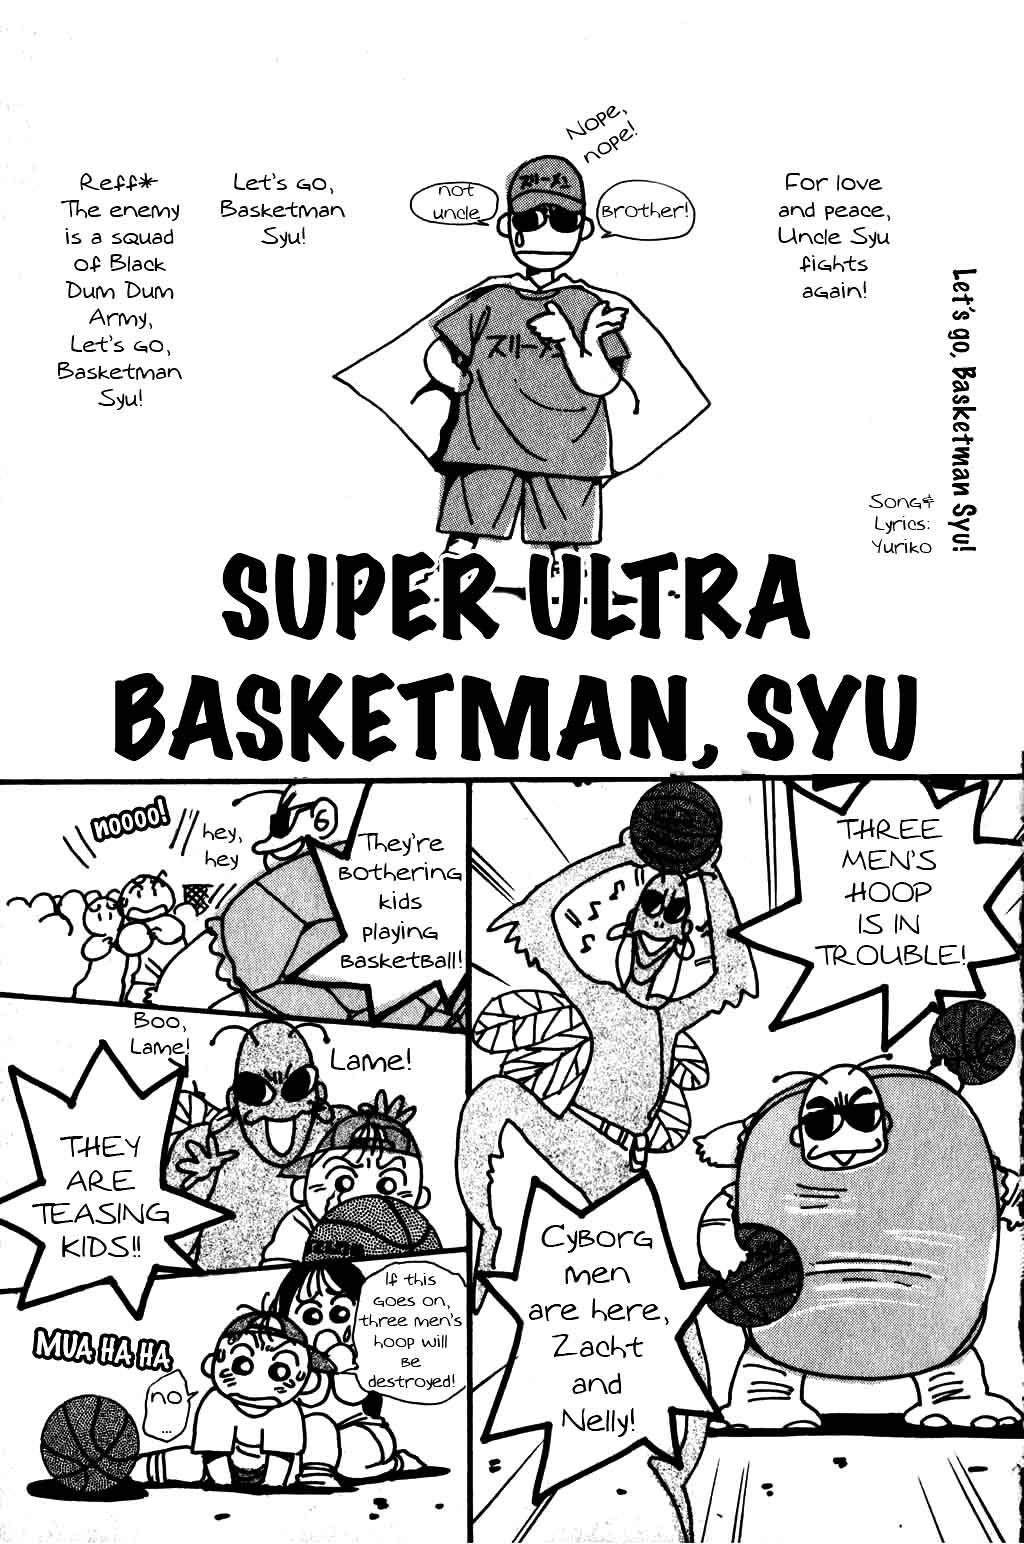 Harlem Beat Vol. 2 Ch. 14.5 Super Basketman Syu, Part 2